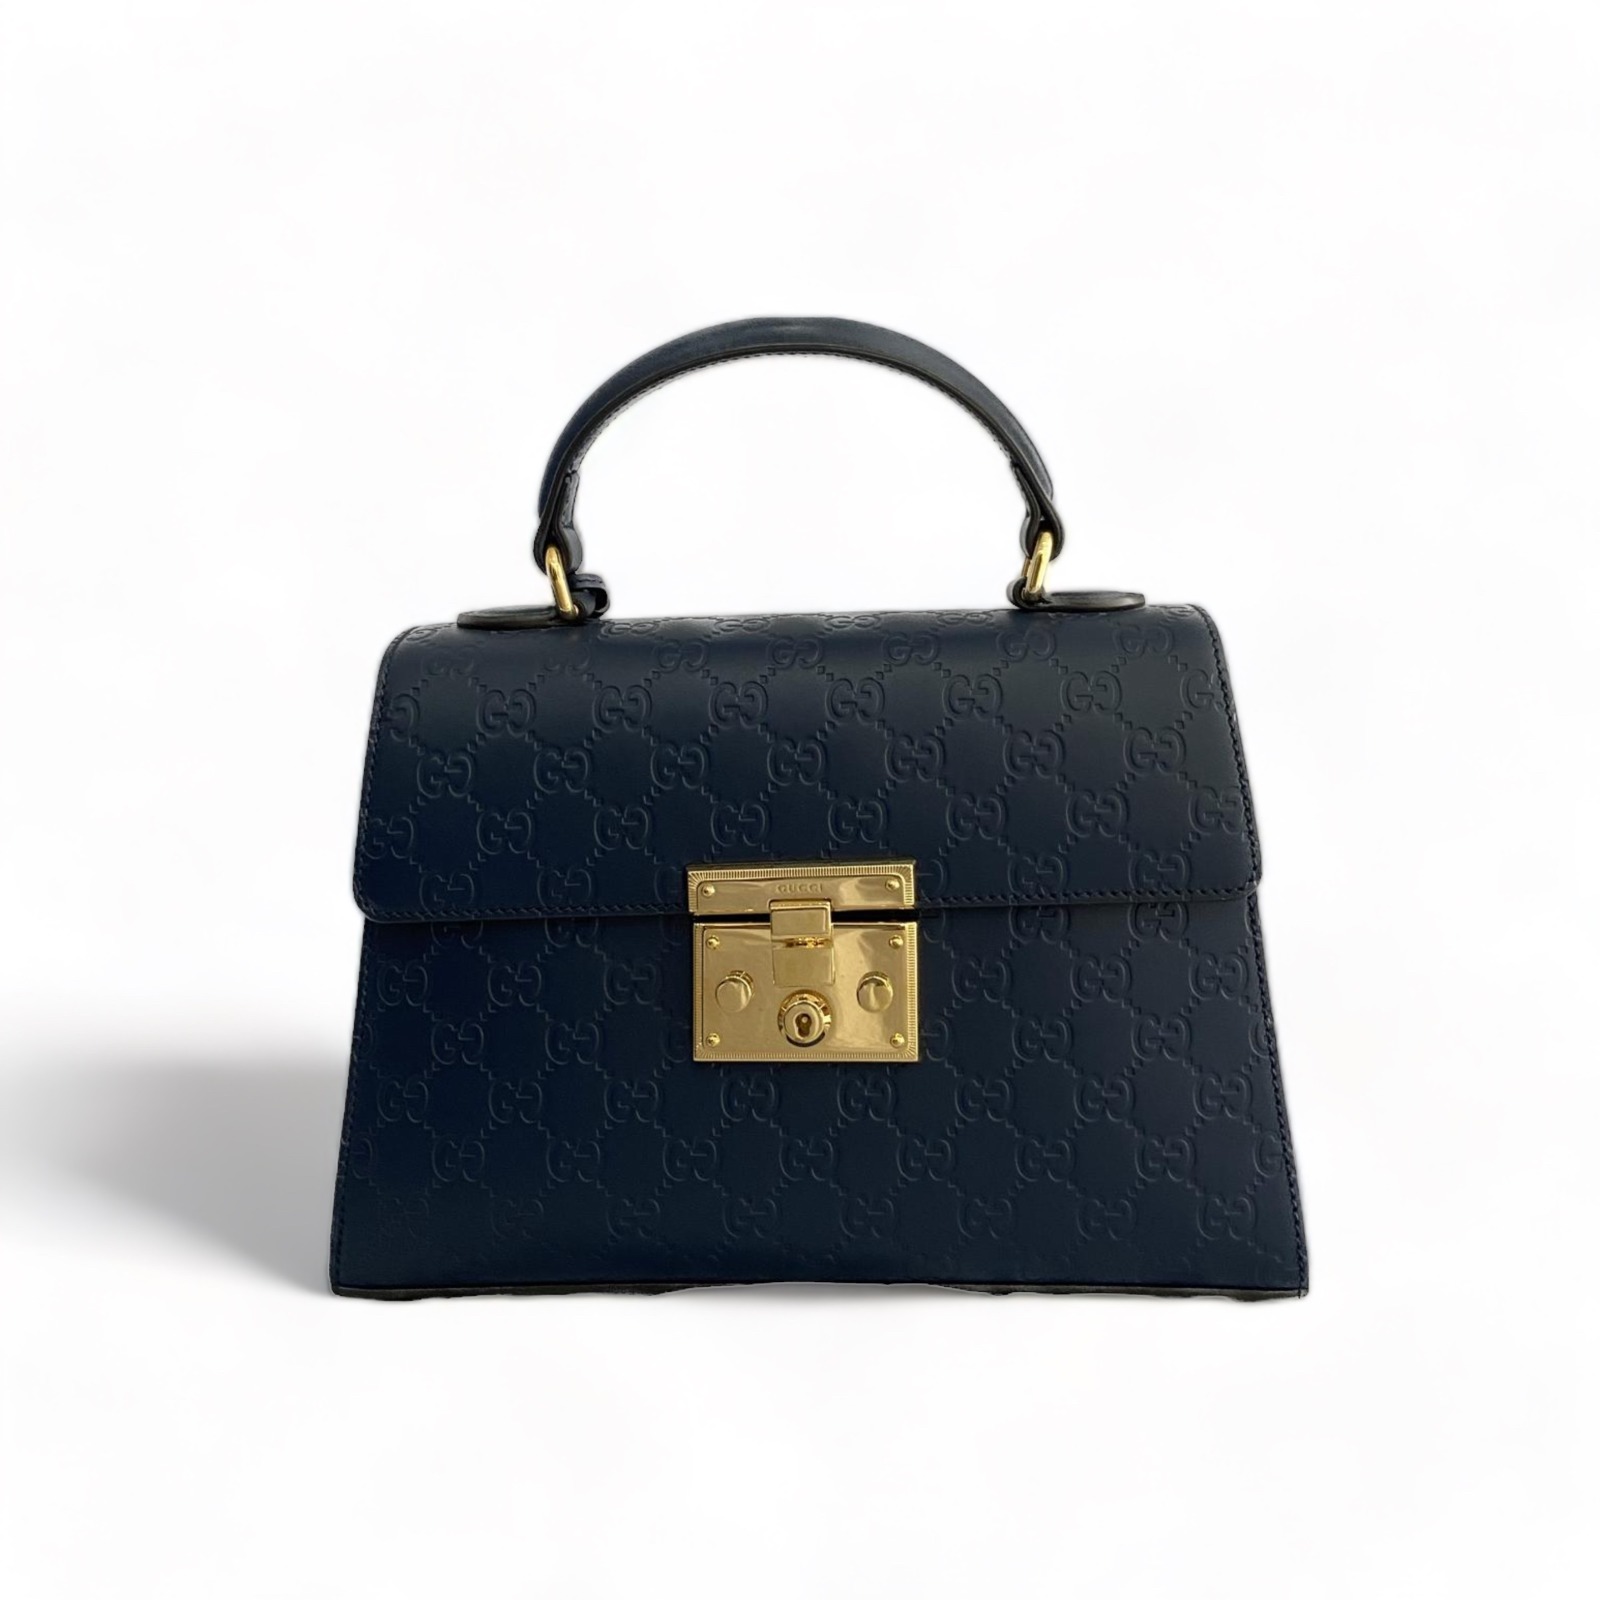 Gucci – Padlock handbag